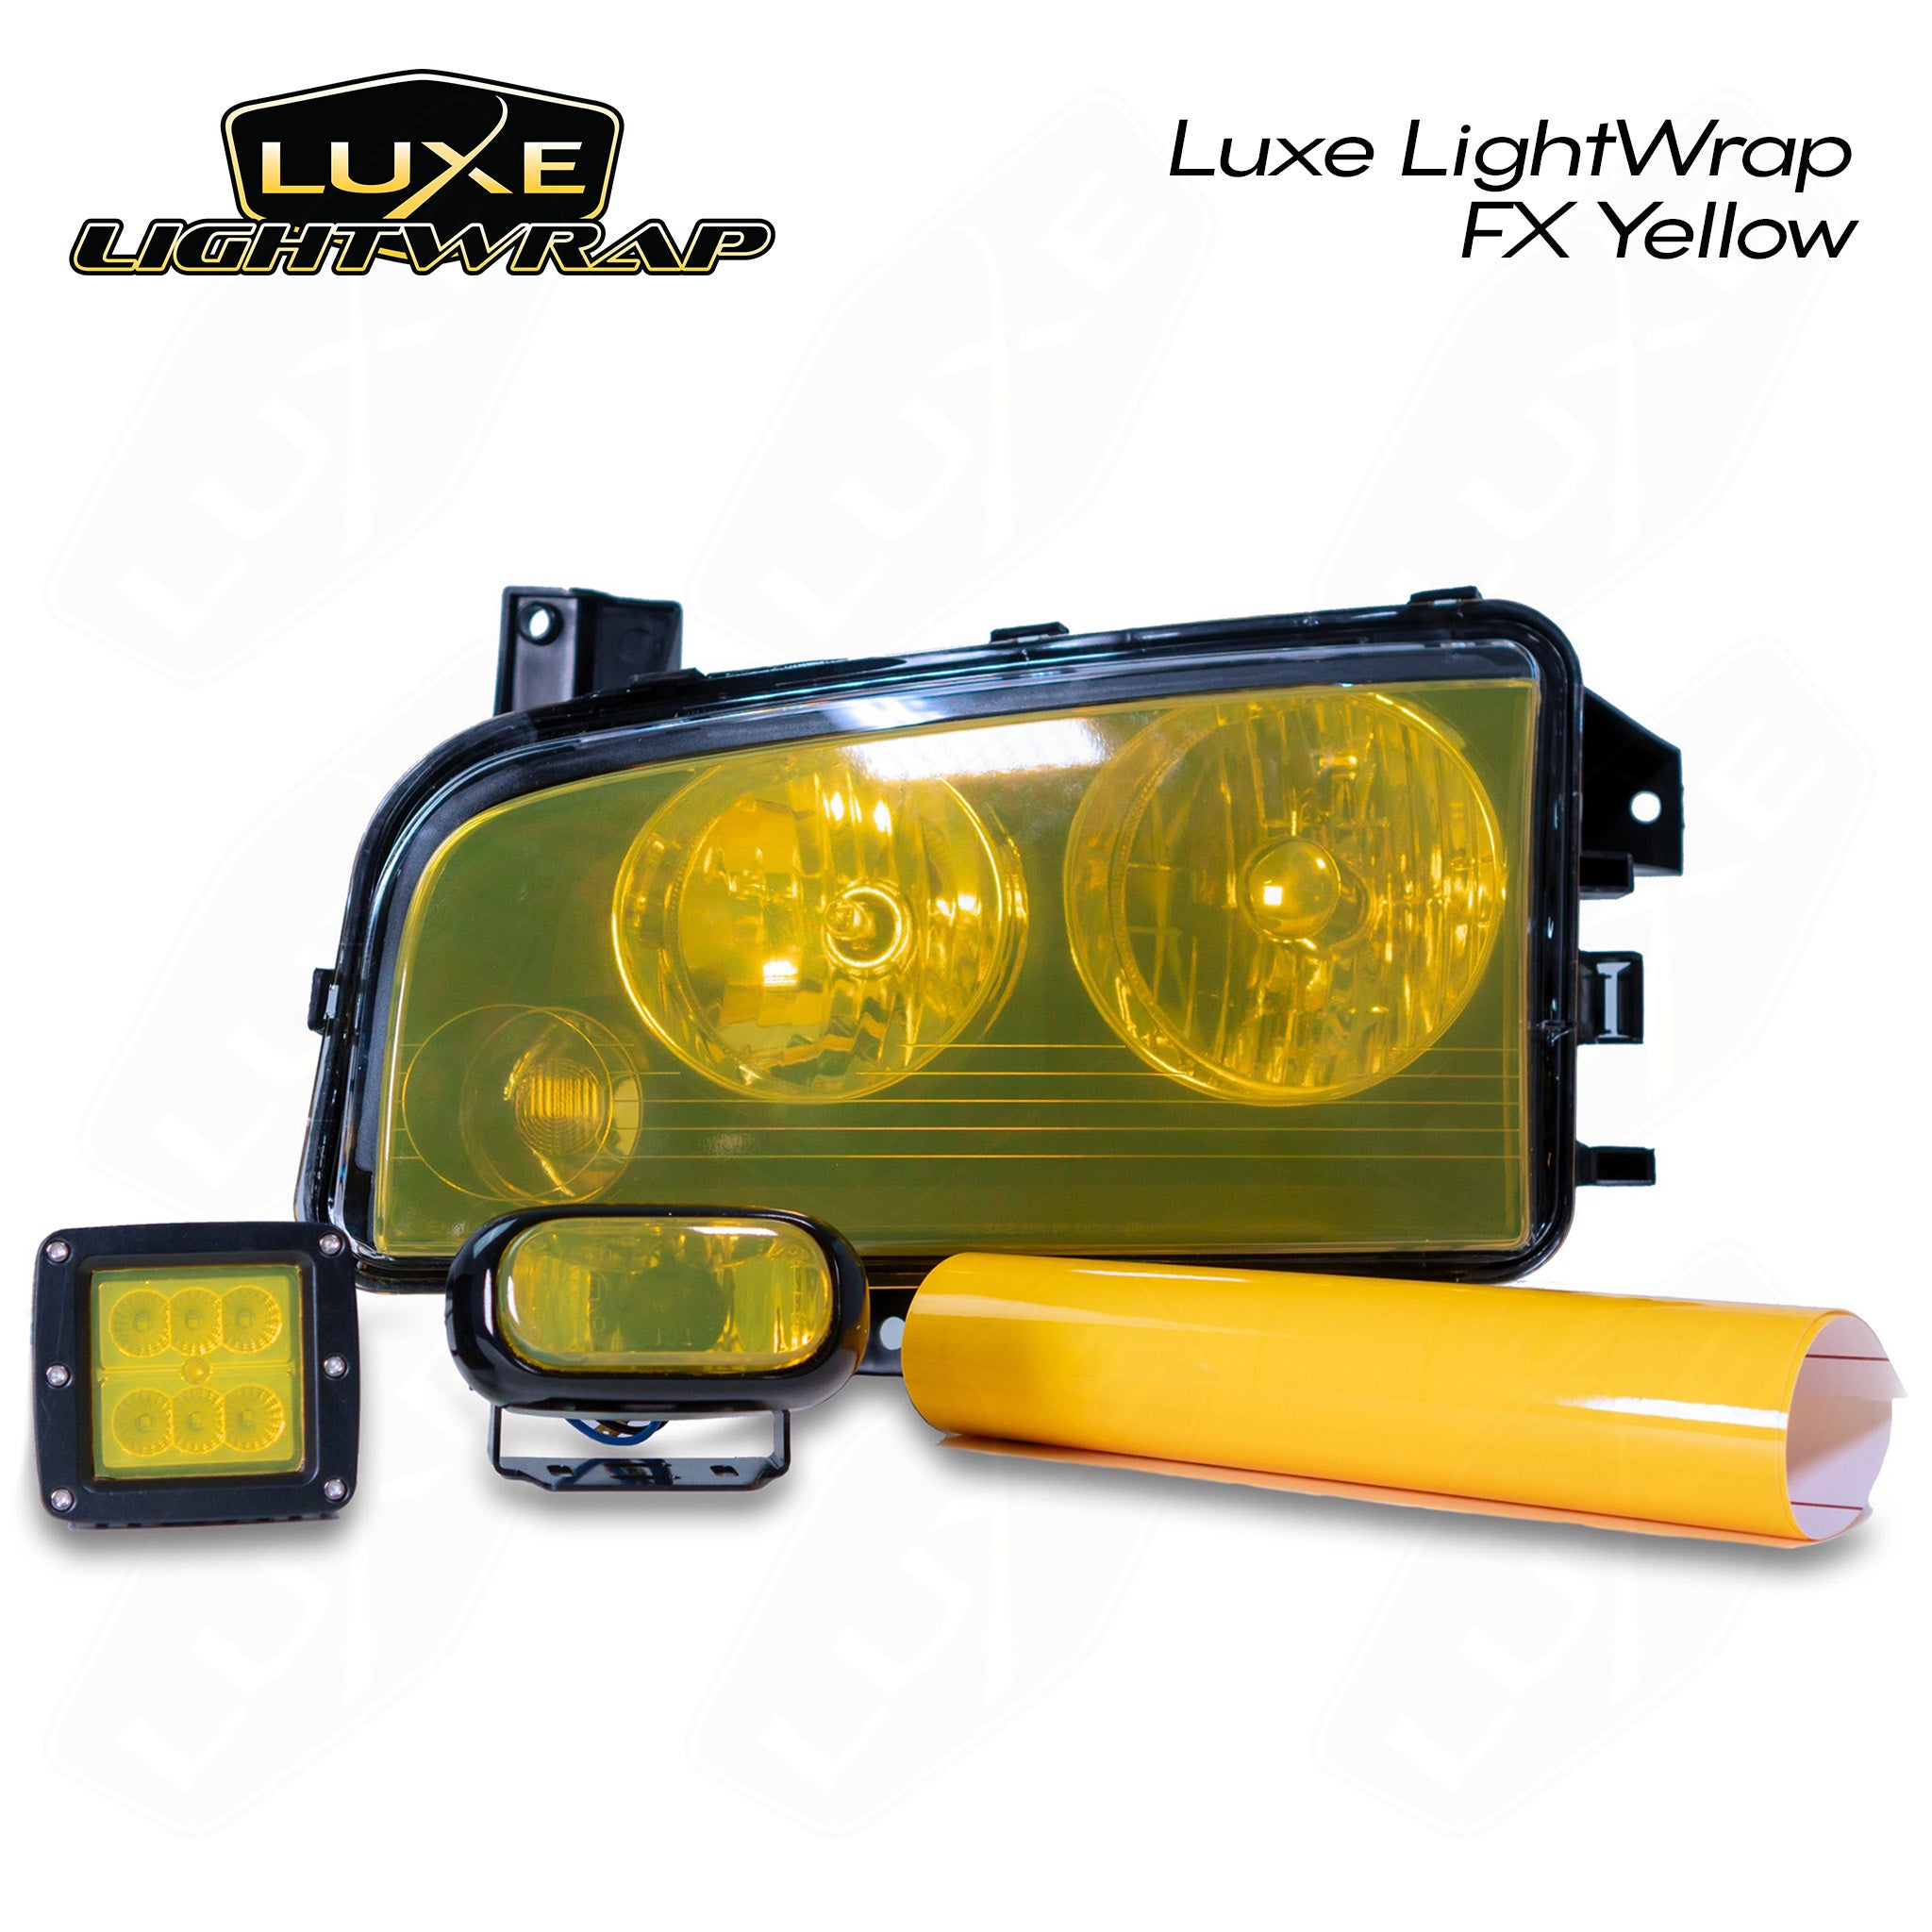 Luxe LightWrap - FX Yellow - LightWrap